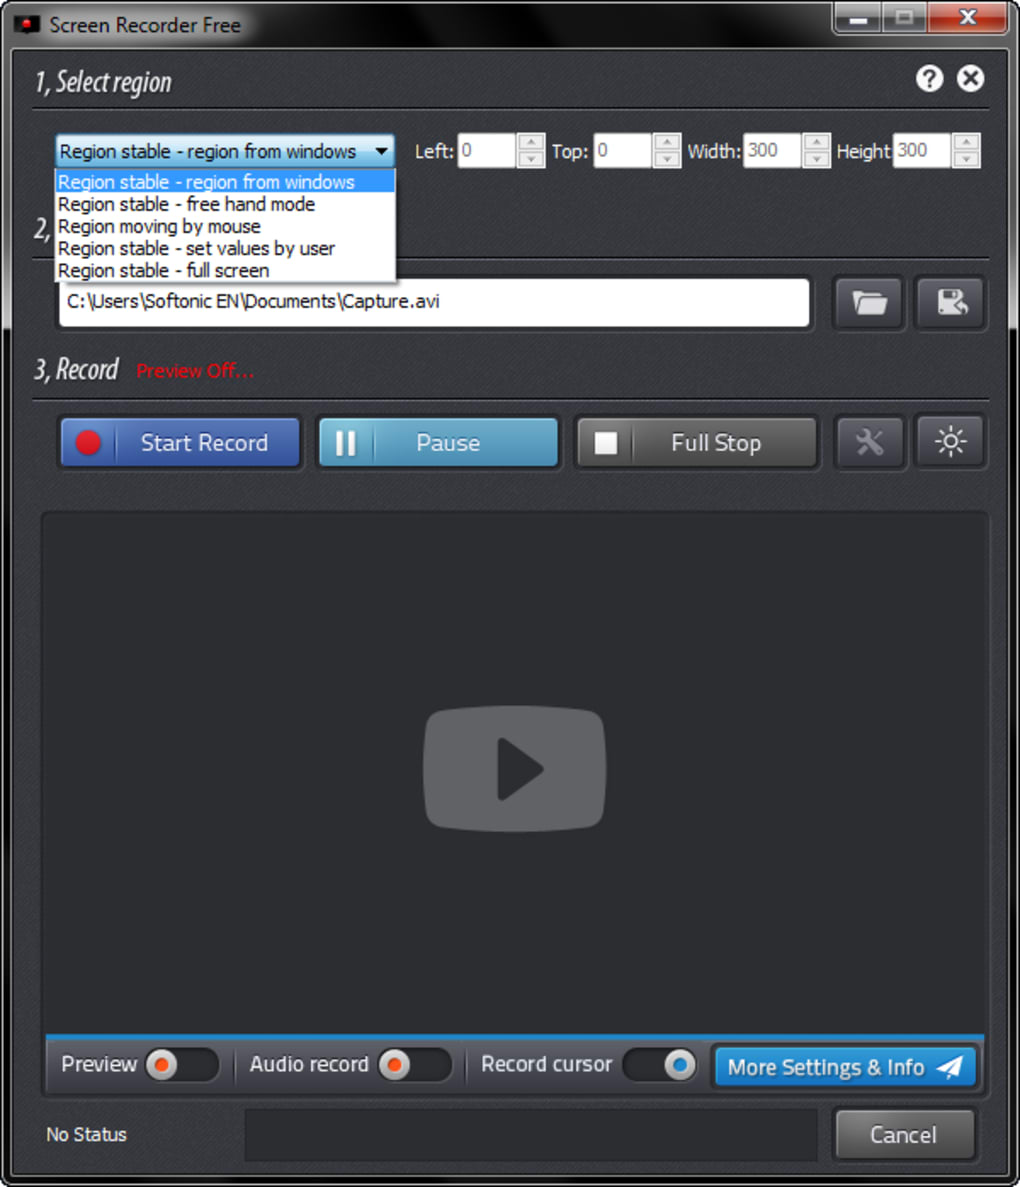 Download Free Mac Screen Recorder